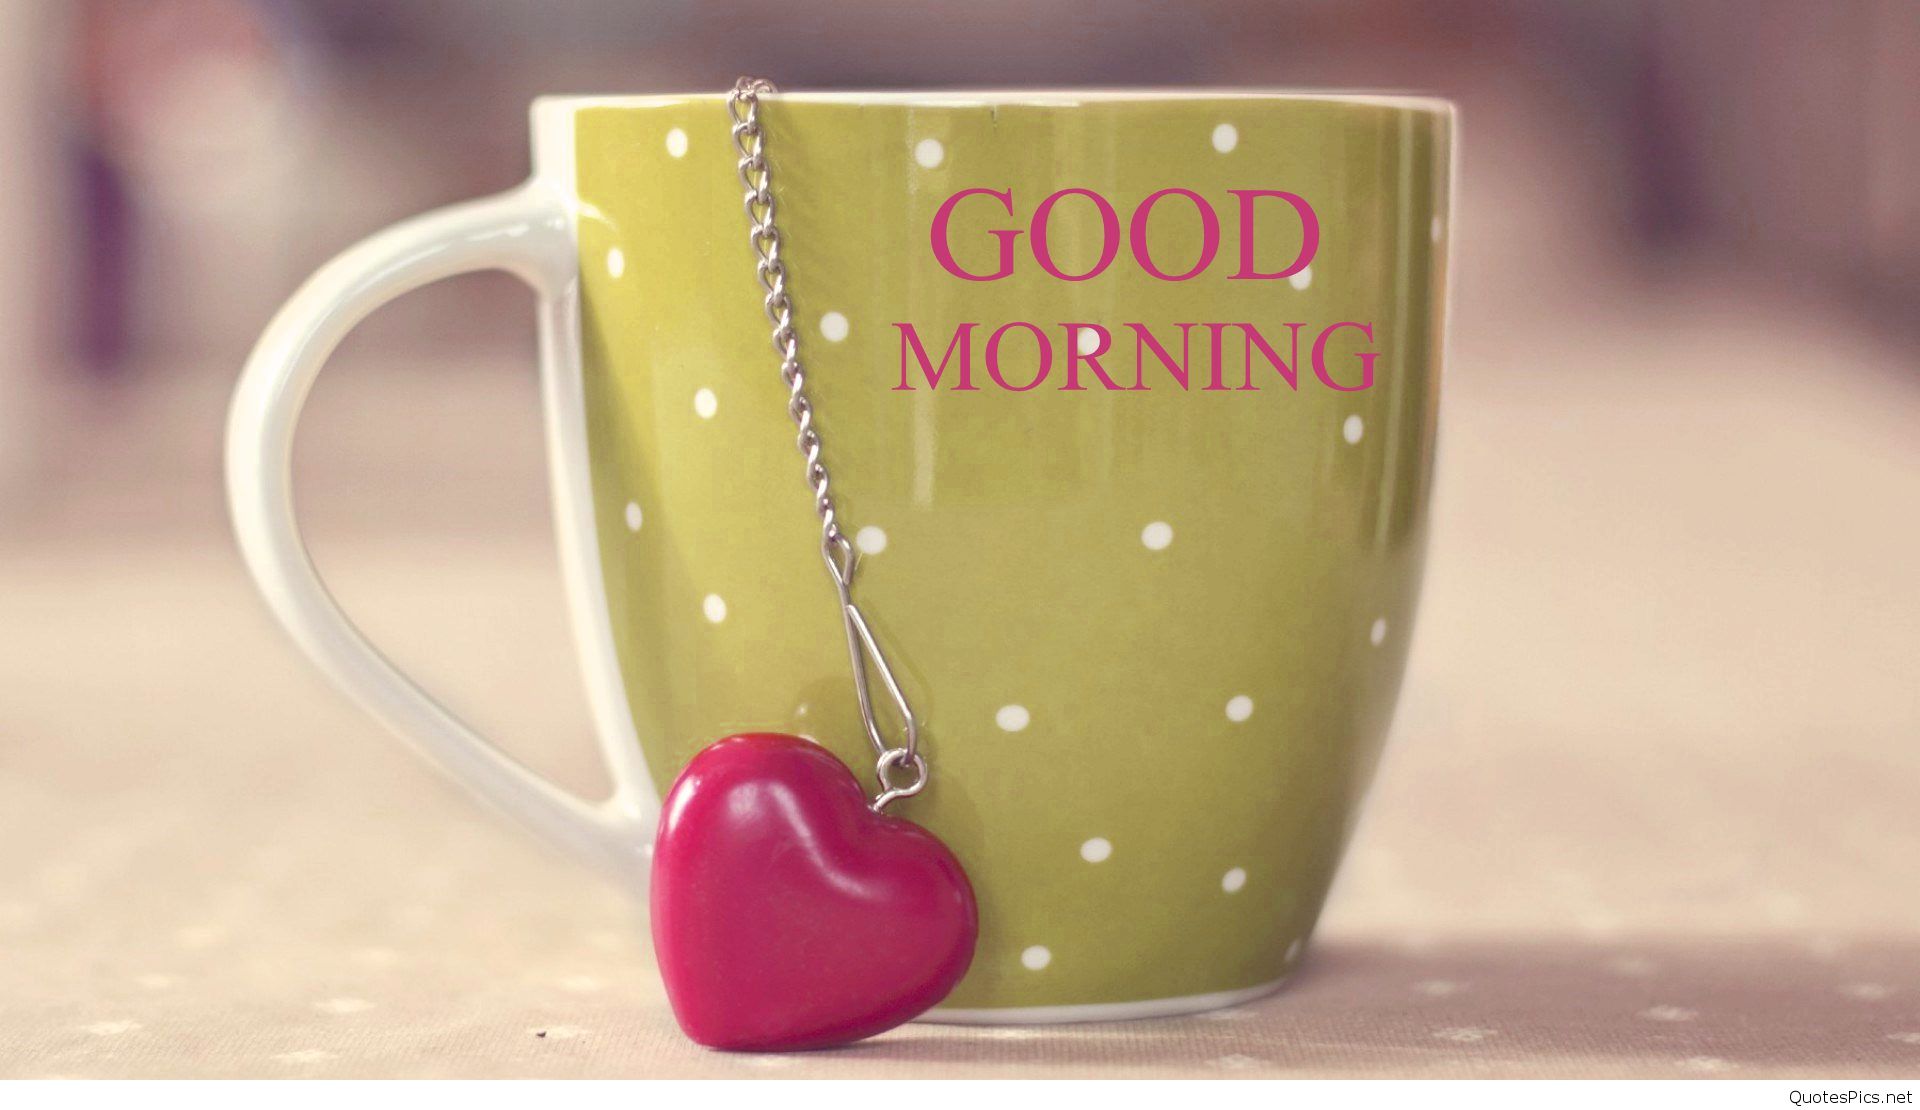 good morning wallpaper image,mug,cup,drinkware,coffee cup,cup